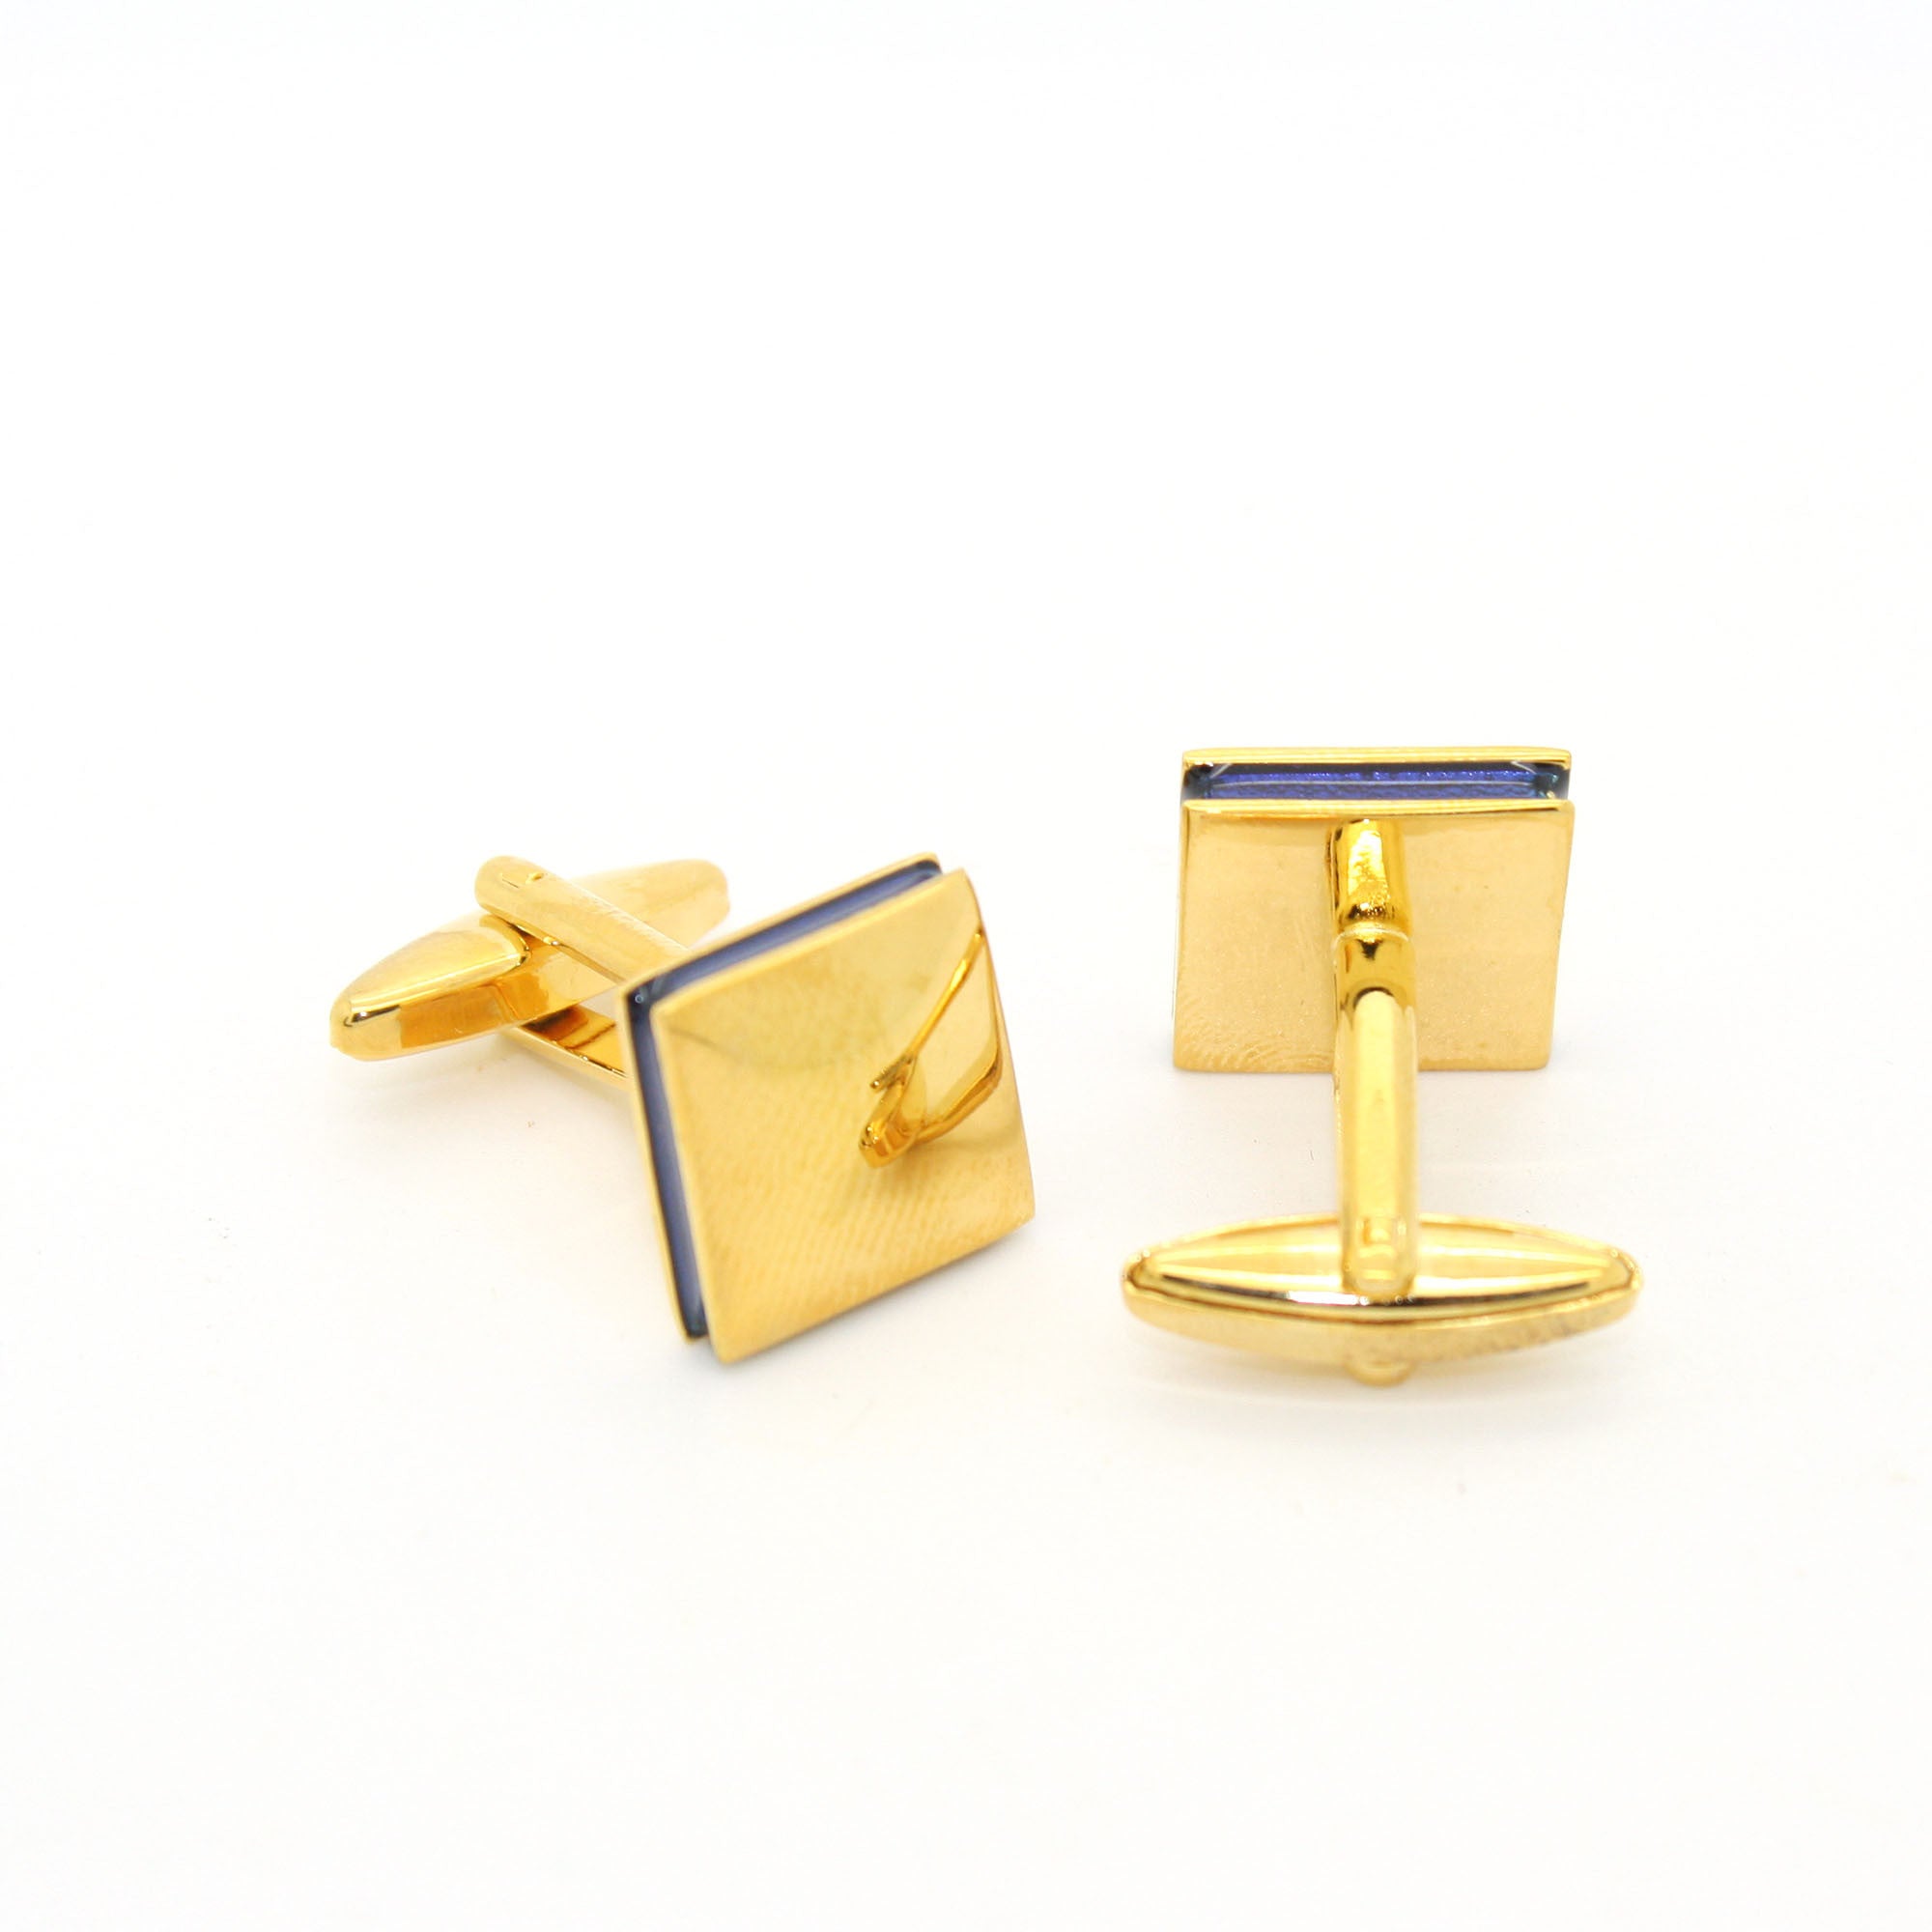 Goldtone Blue Lining Cuff Links With Jewelry Box